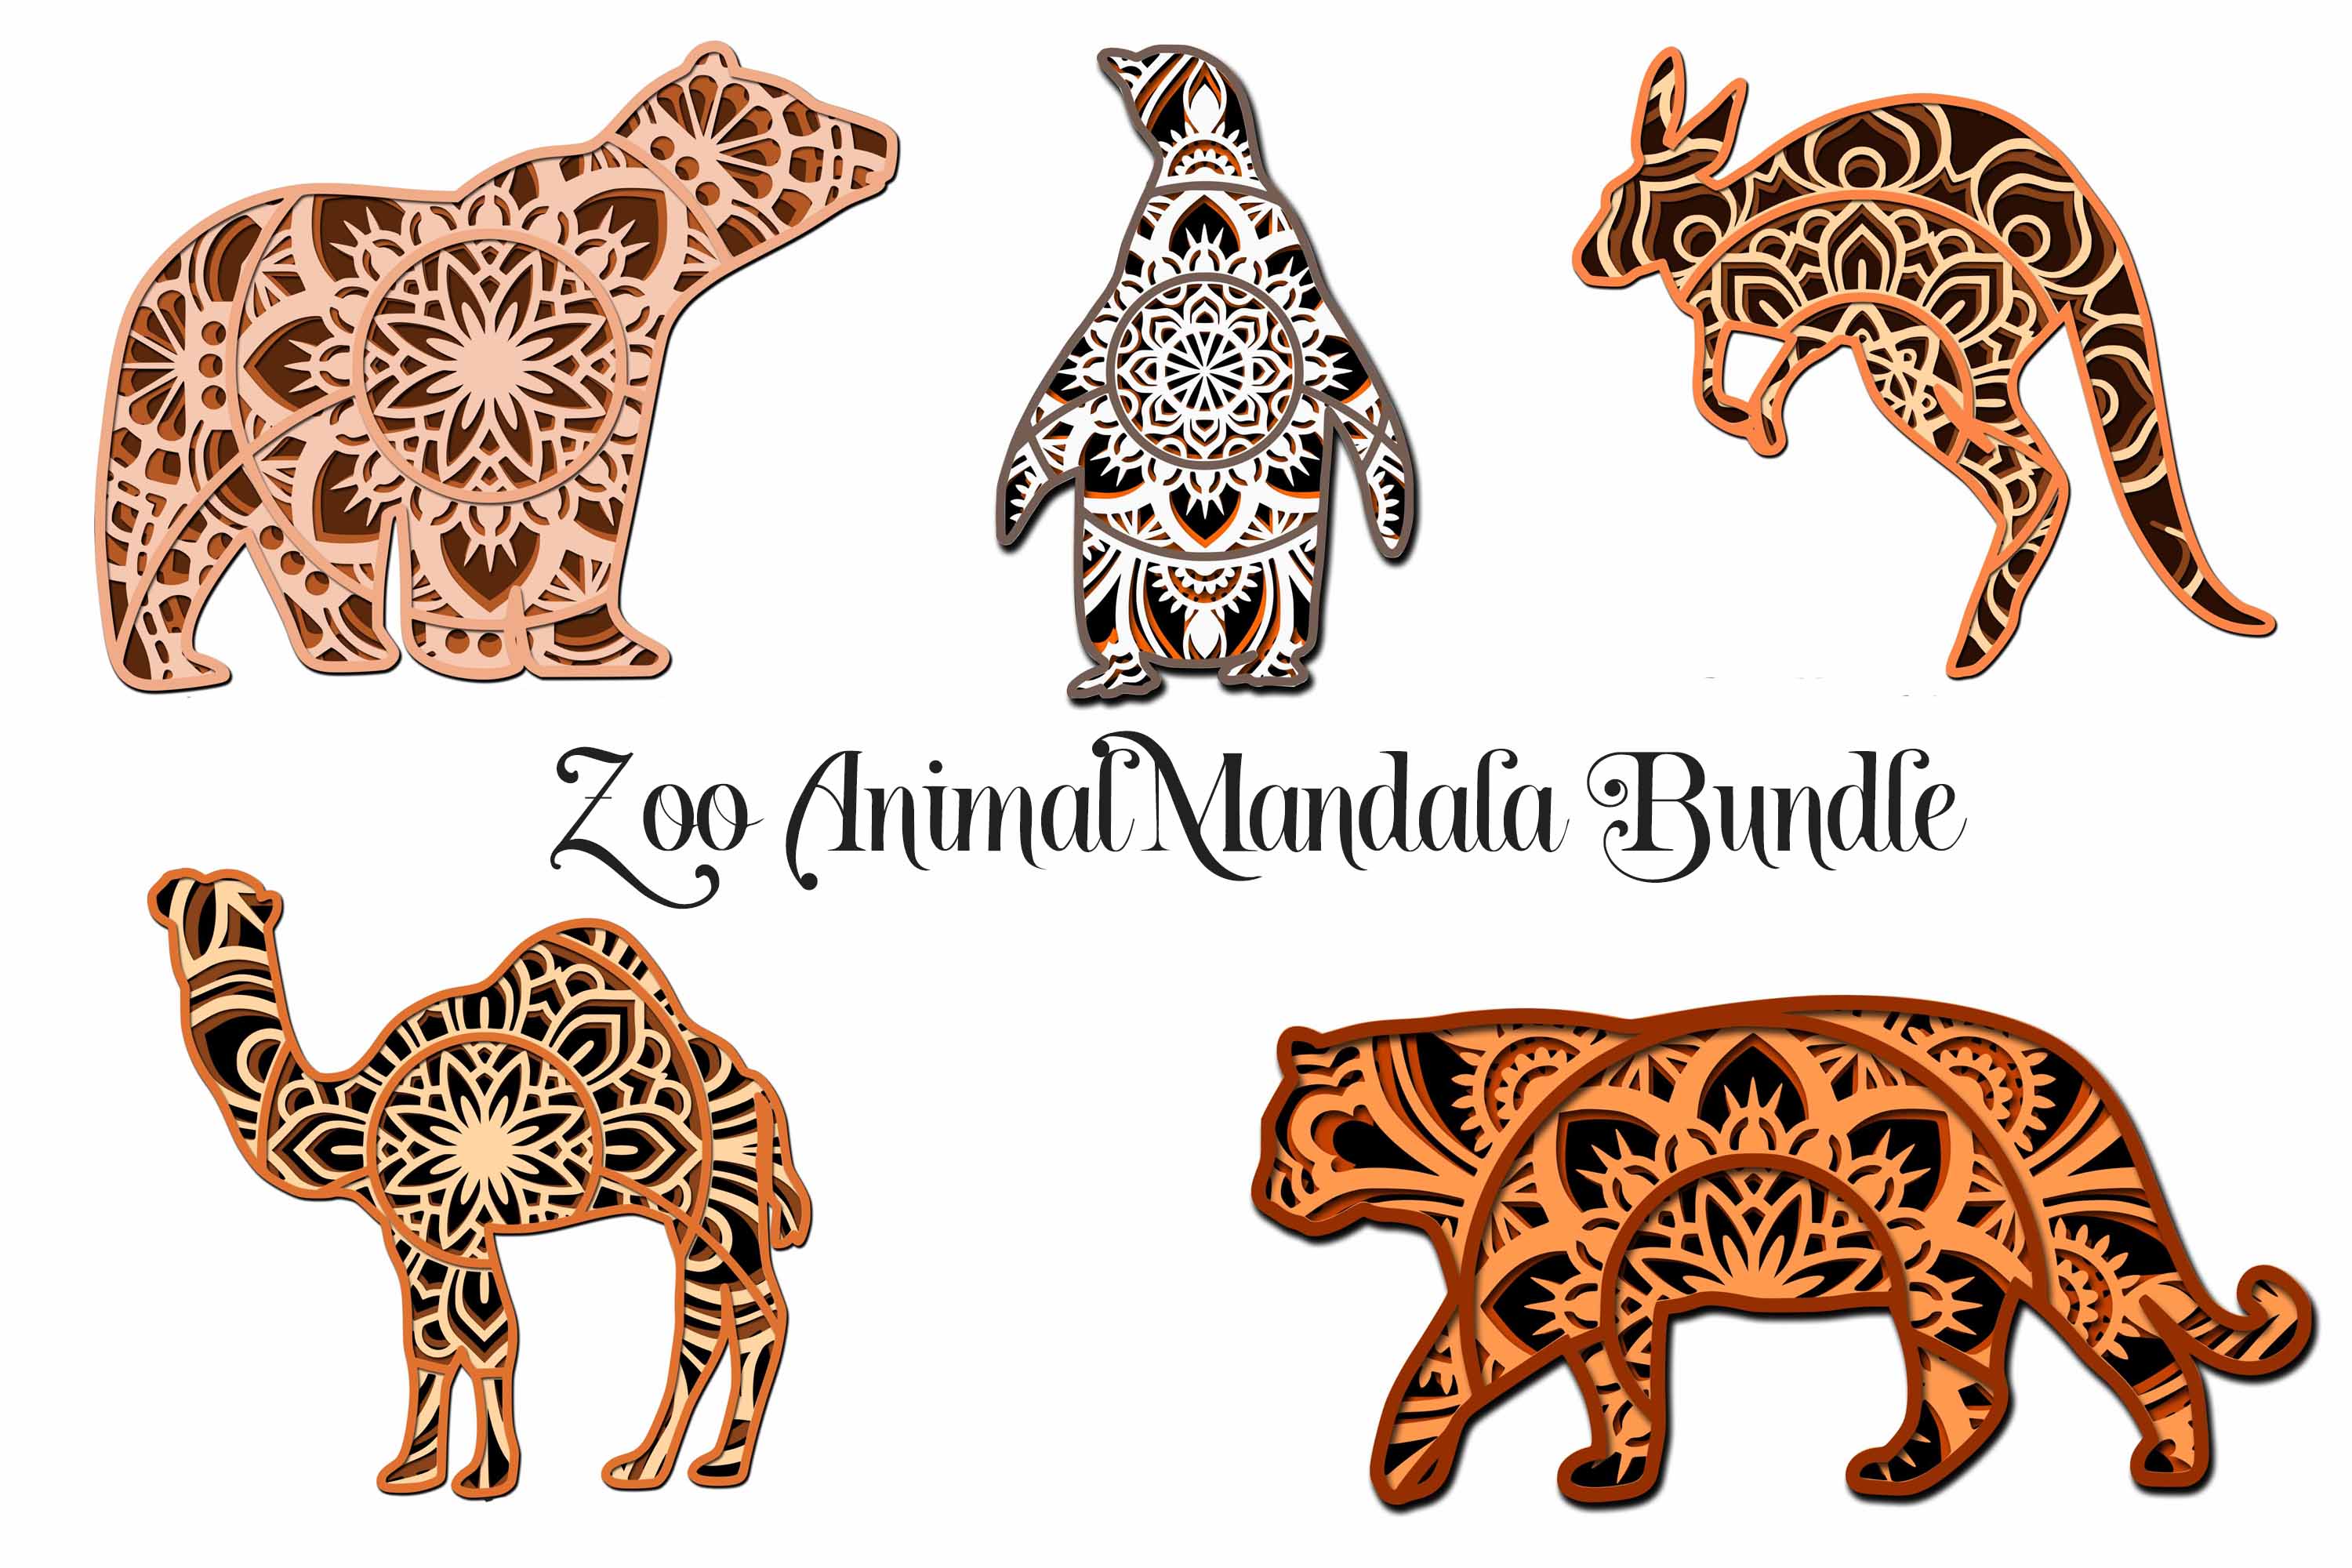 Animal Pattern SVG, DXF, Clipart, Animal cutting, Wild Animal, Animal Skin  vector, Animal Pattern shape, Animal Pattern silhouette